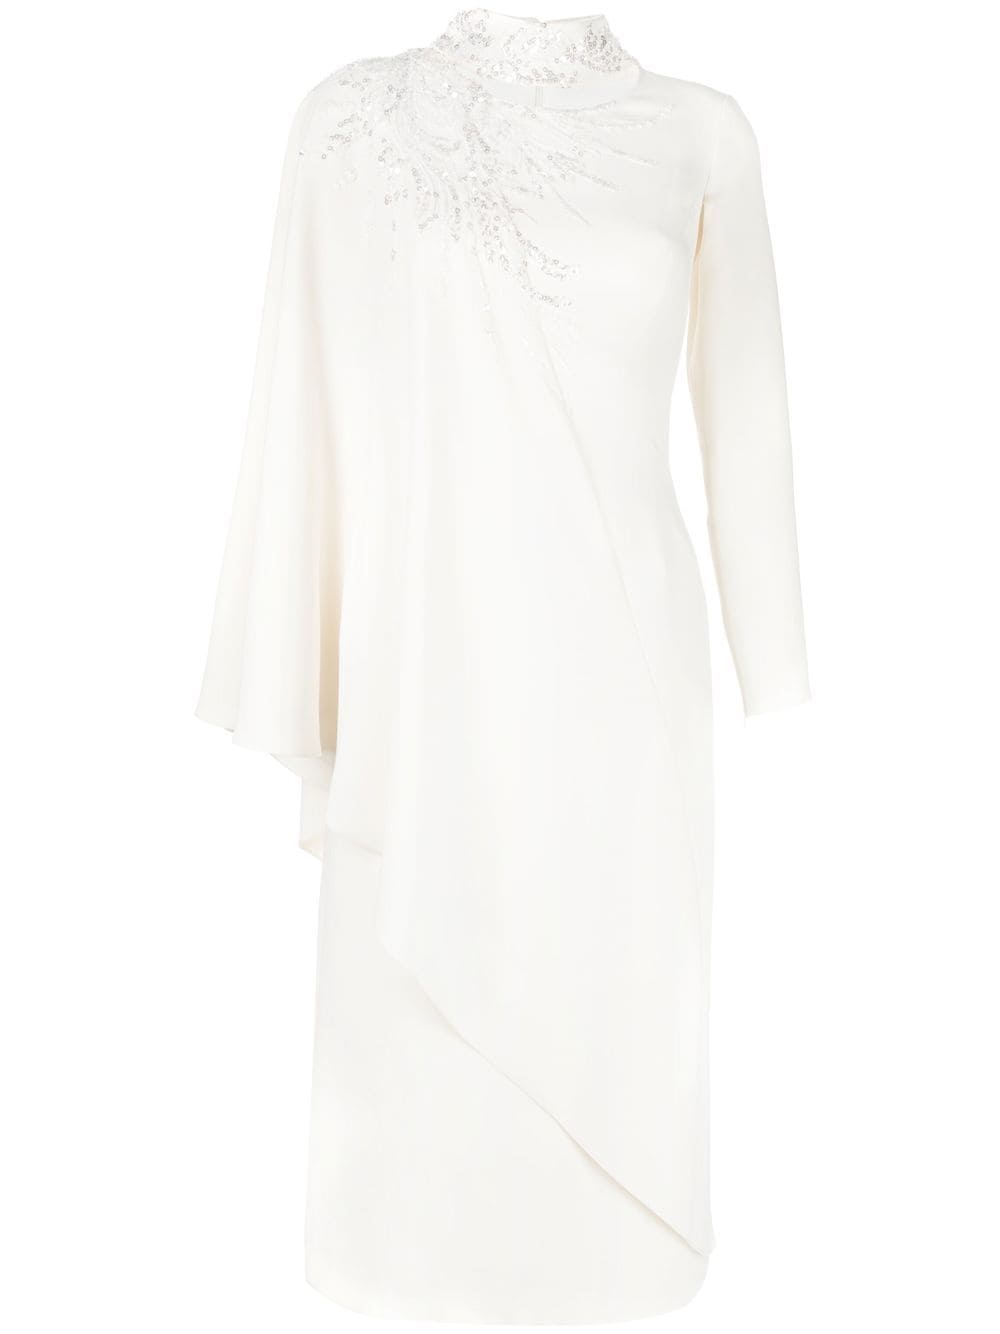 Saiid Kobeisy sequin embroidered draped dress - White von Saiid Kobeisy